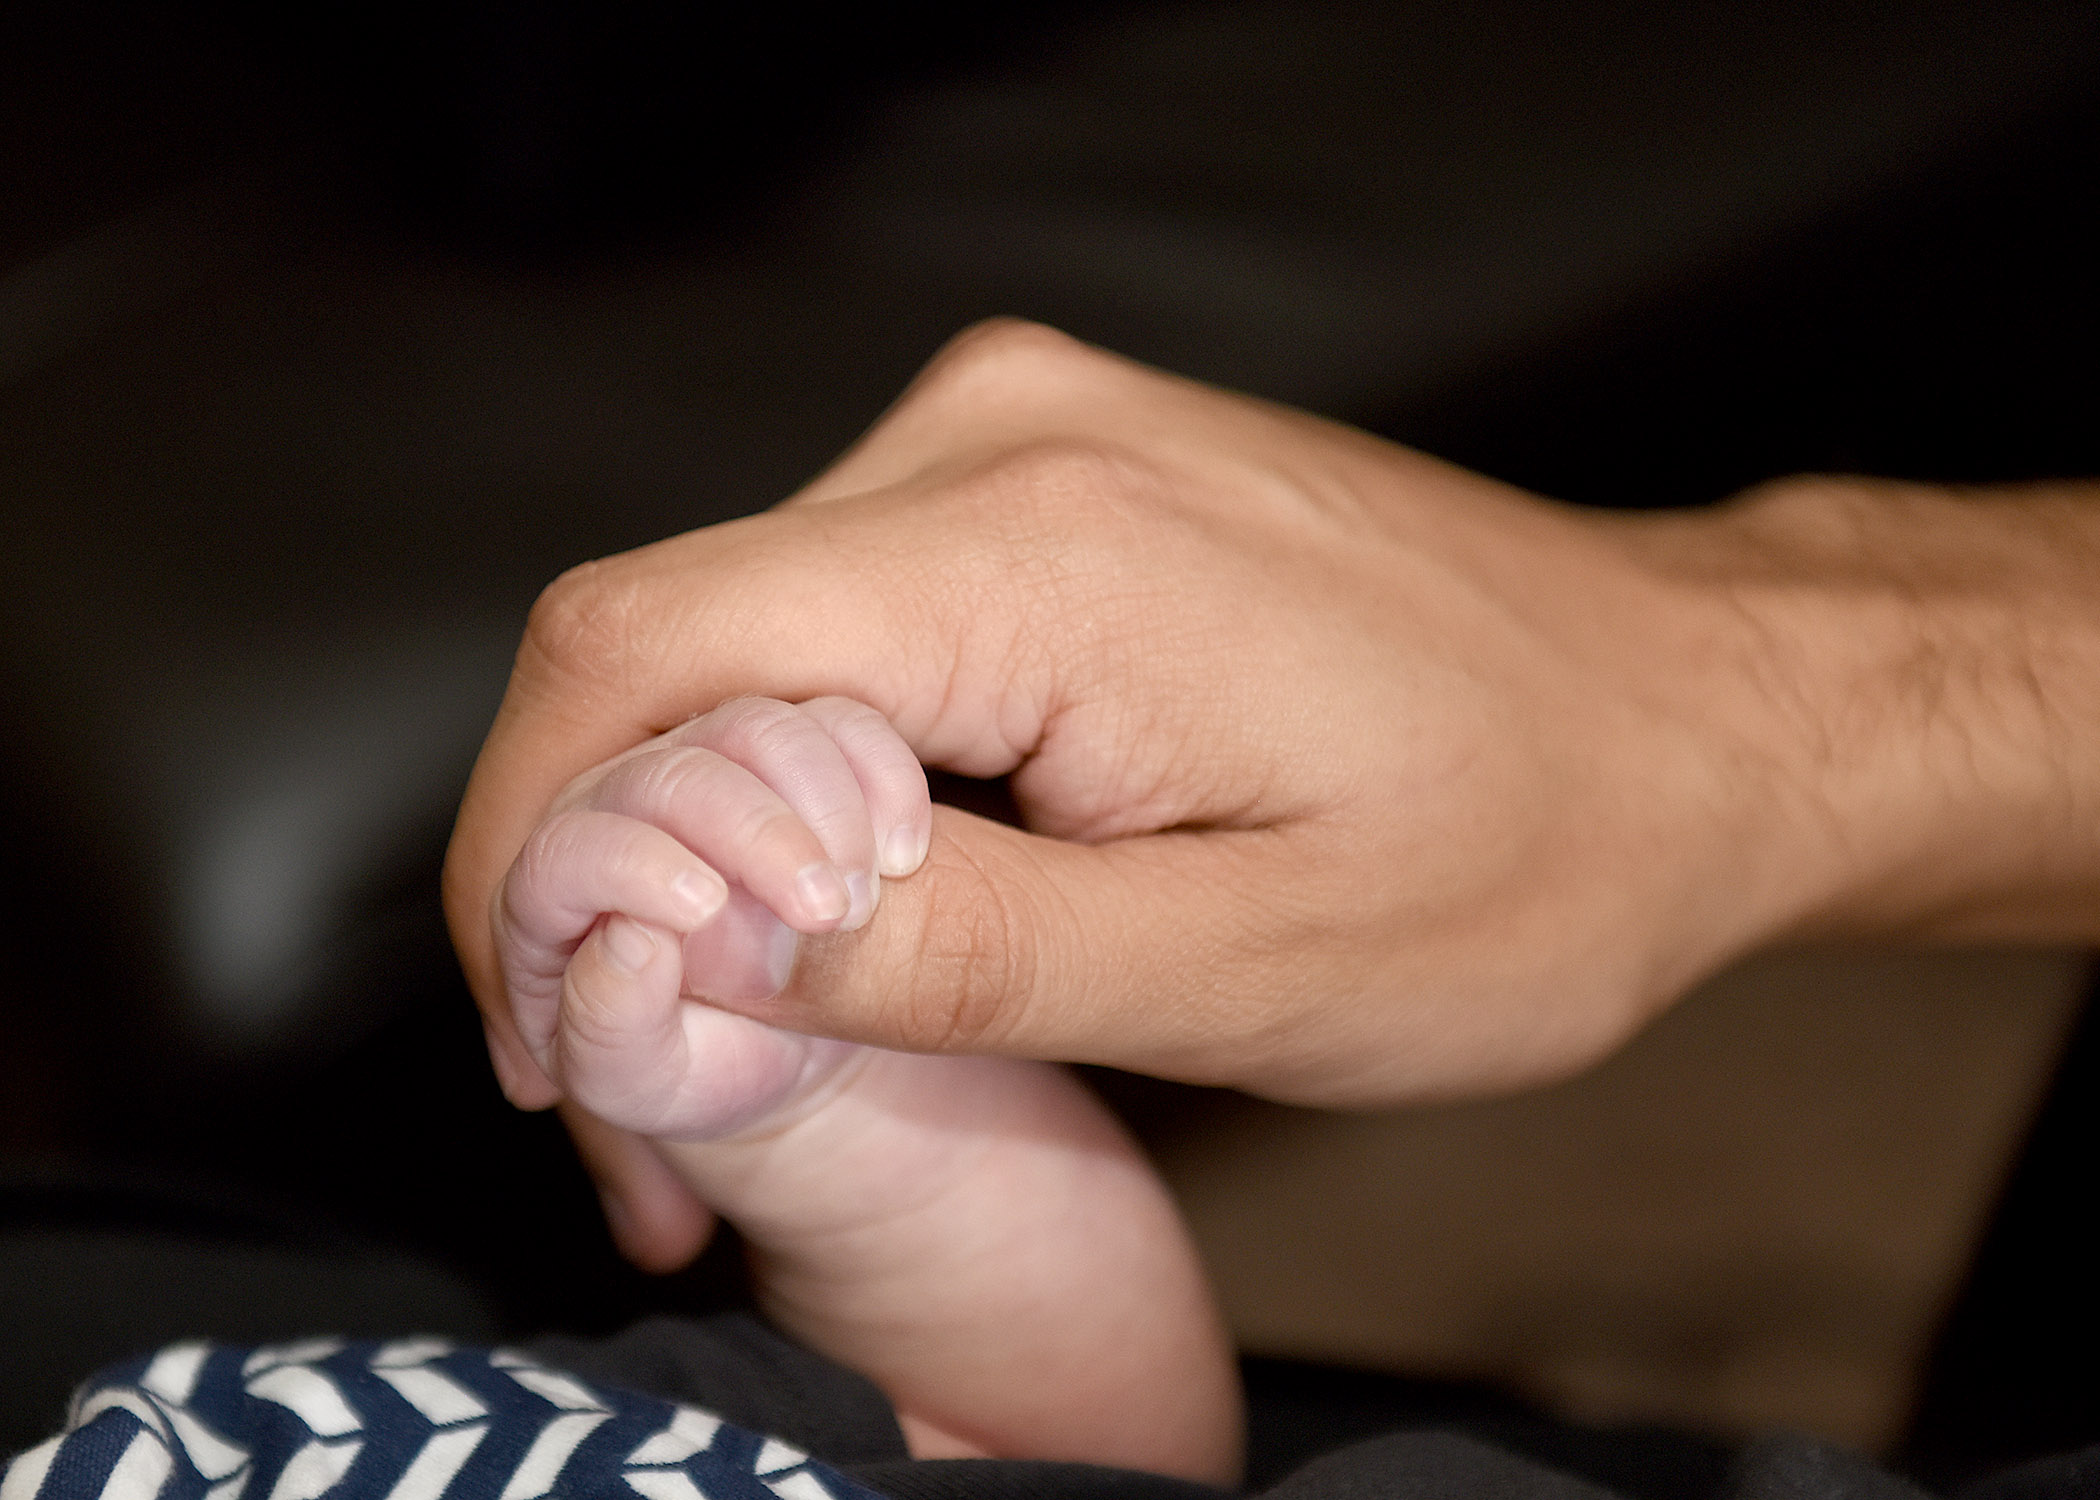 Infant holding parent's hand